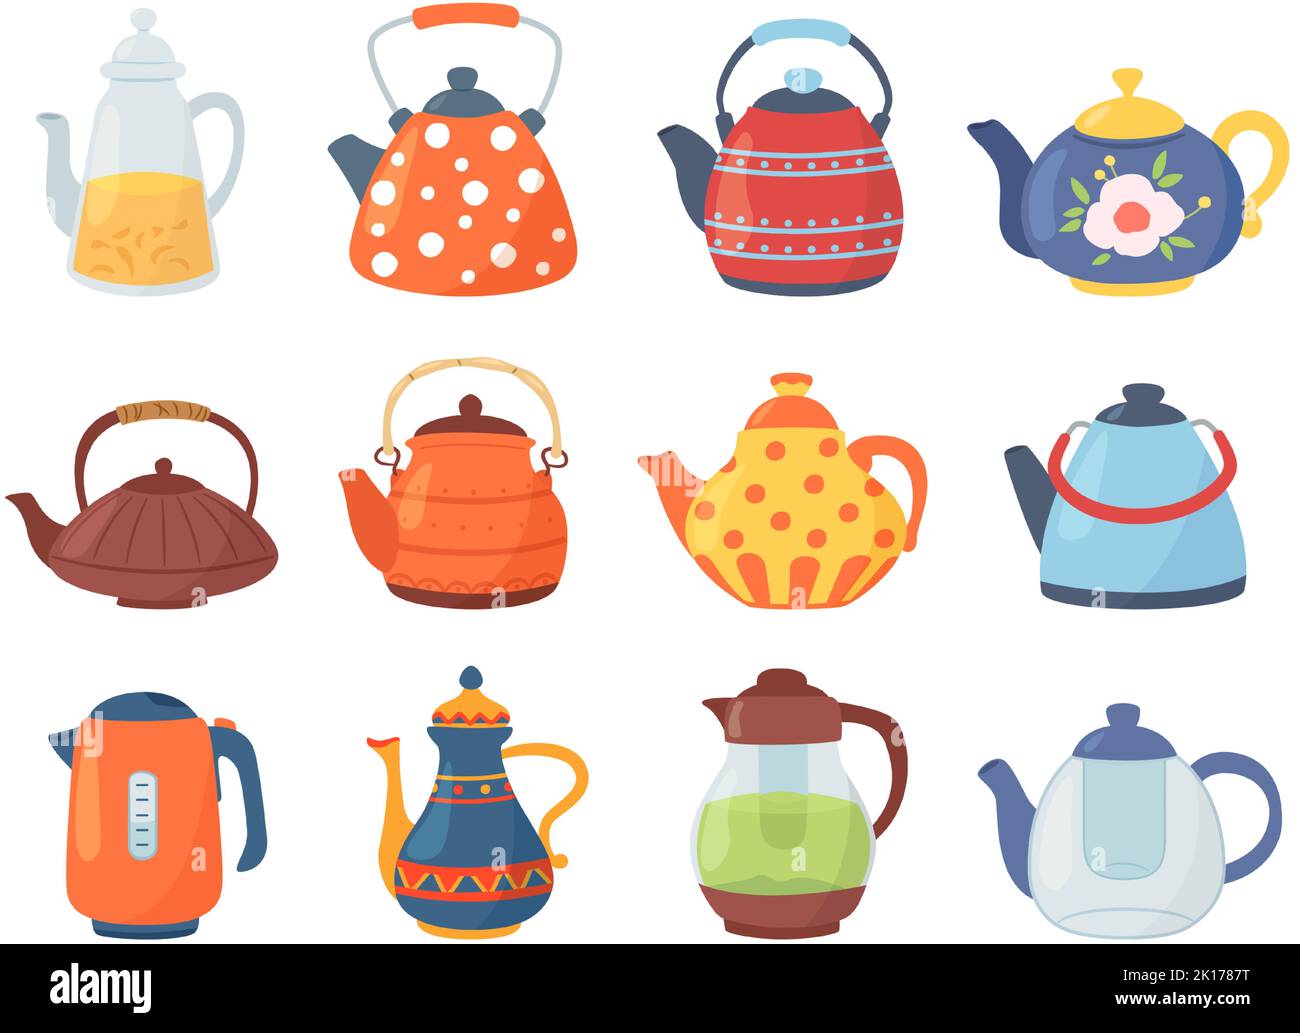 https://c8.alamy.com/comp/2K1787T/cartoon-teapots-and-kettles-tea-pitcher-coffee-jug-and-ceramic-kitchen-tools-decorative-crockery-items-isolated-vector-illustration-set-2K1787T.jpg